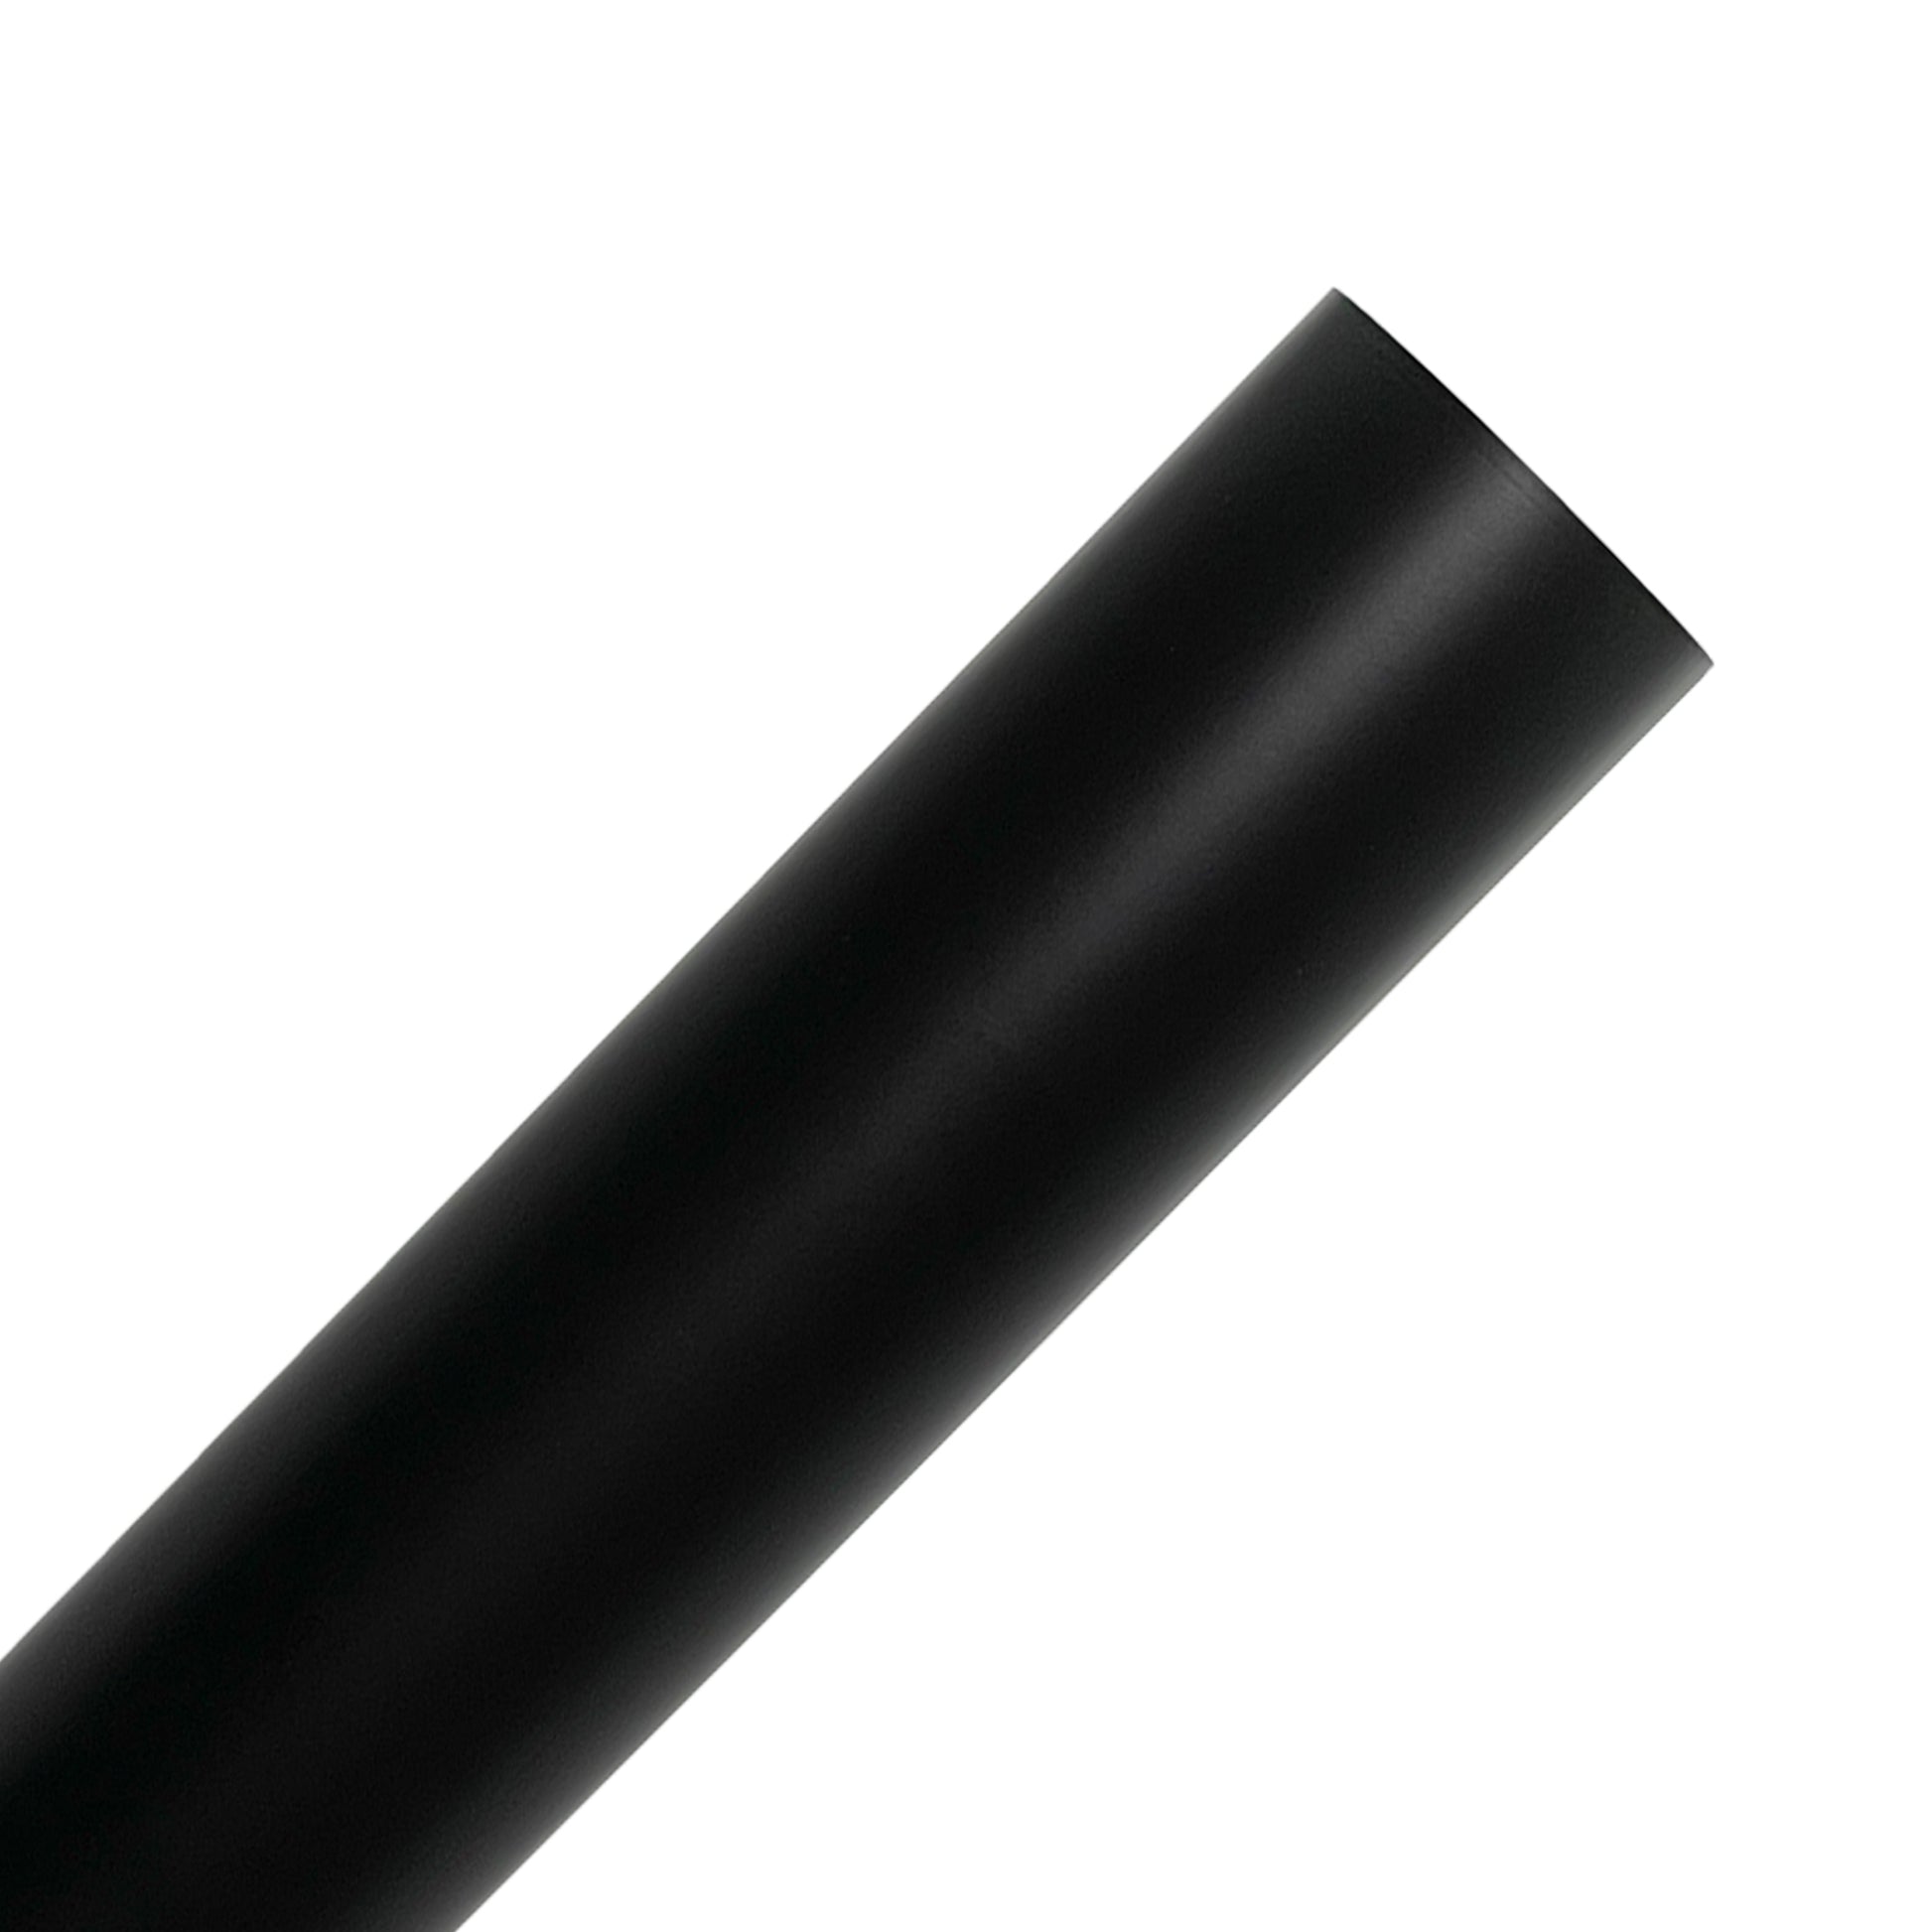 Matte Black Adhesive Vinyl Rolls By Craftables – shopcraftables